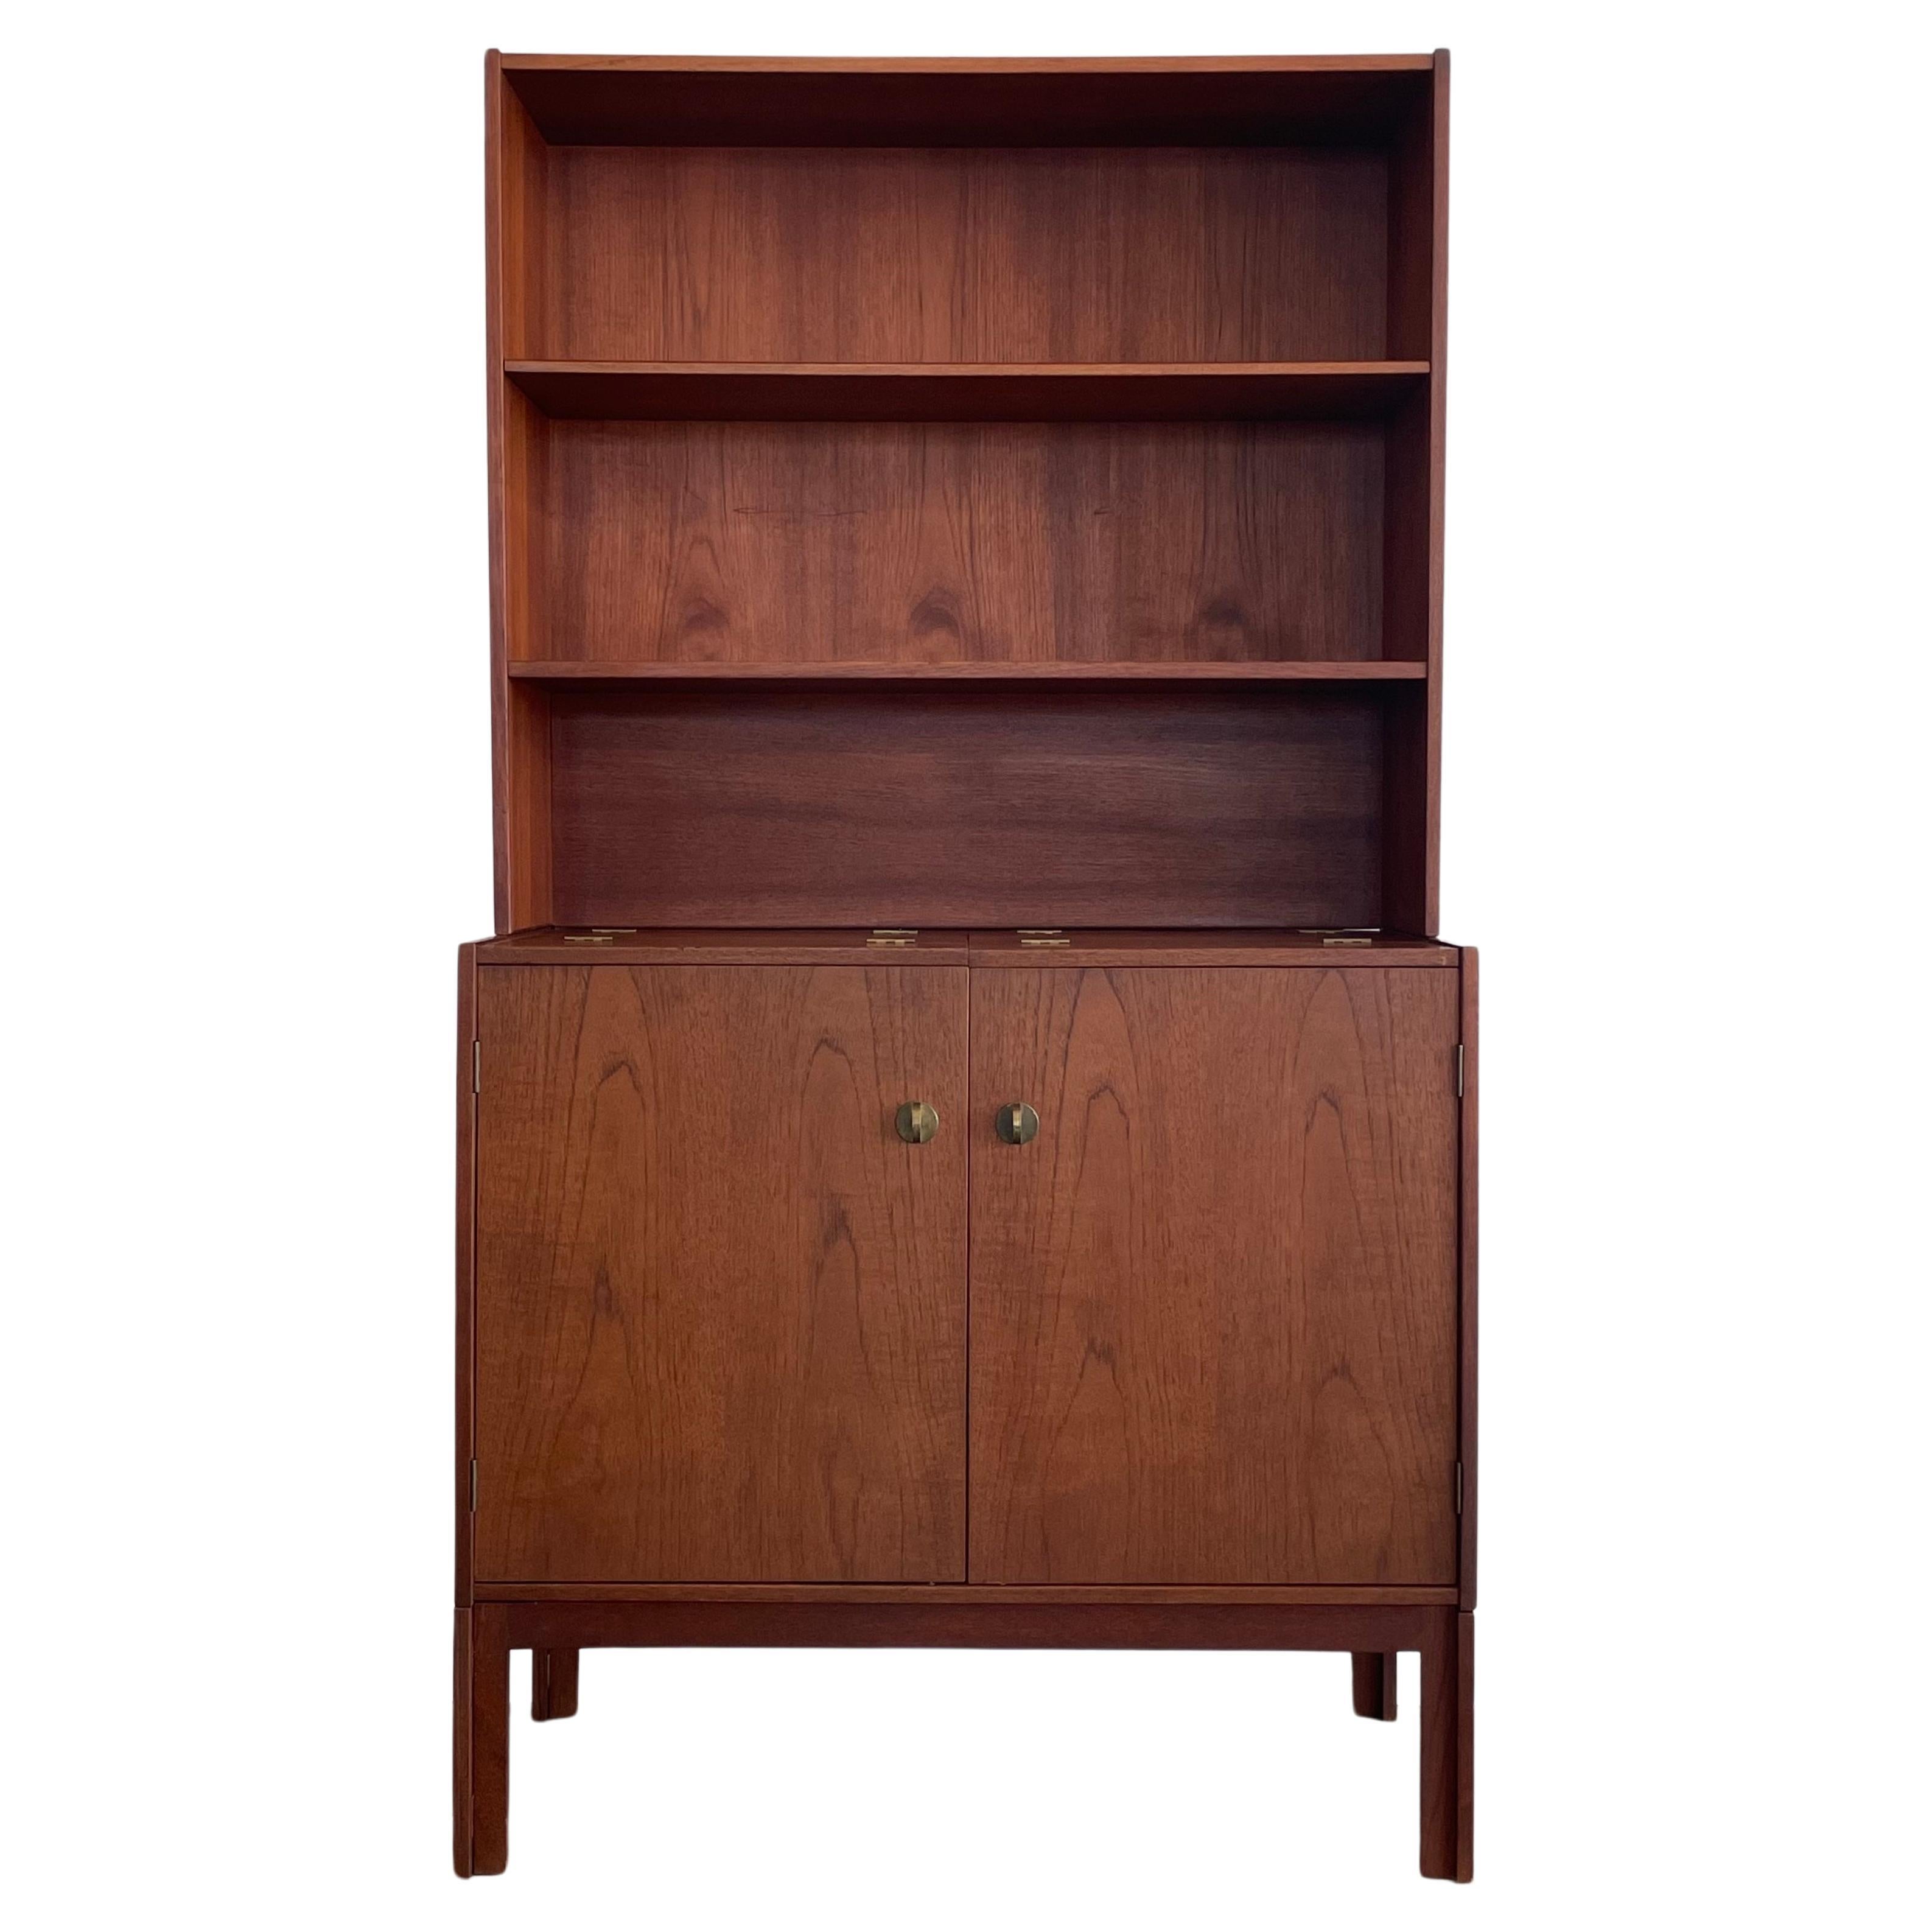 Danish Teak Record Cabinet / Bookshelf For Sale